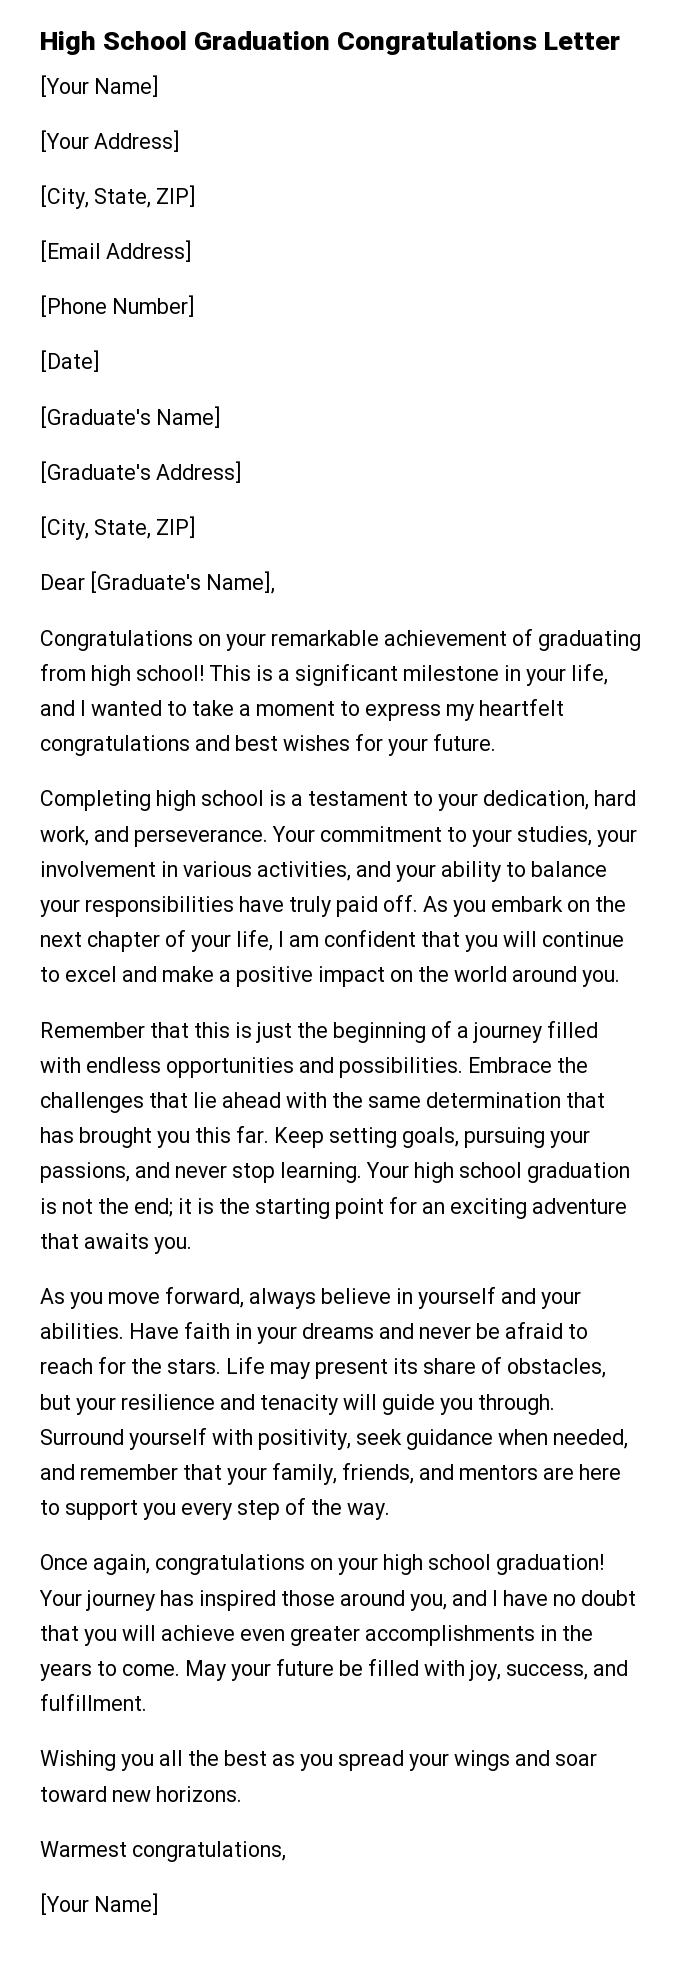 High School Graduation Congratulations Letter